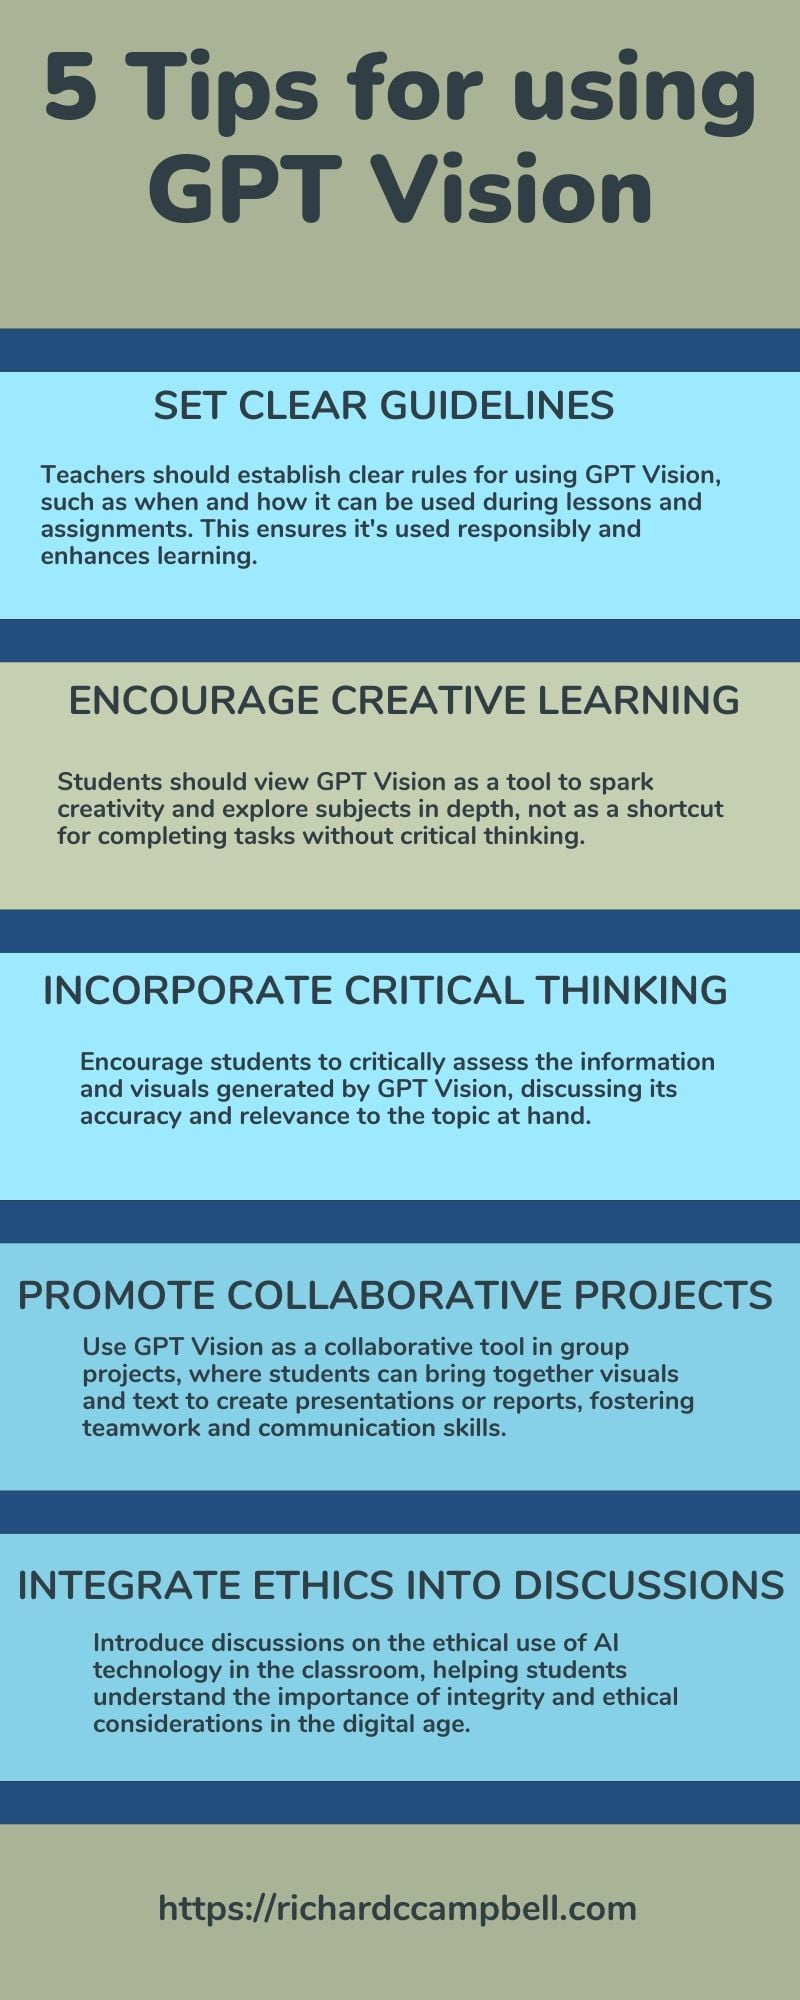 GPT Vision in K-12 Education Tips